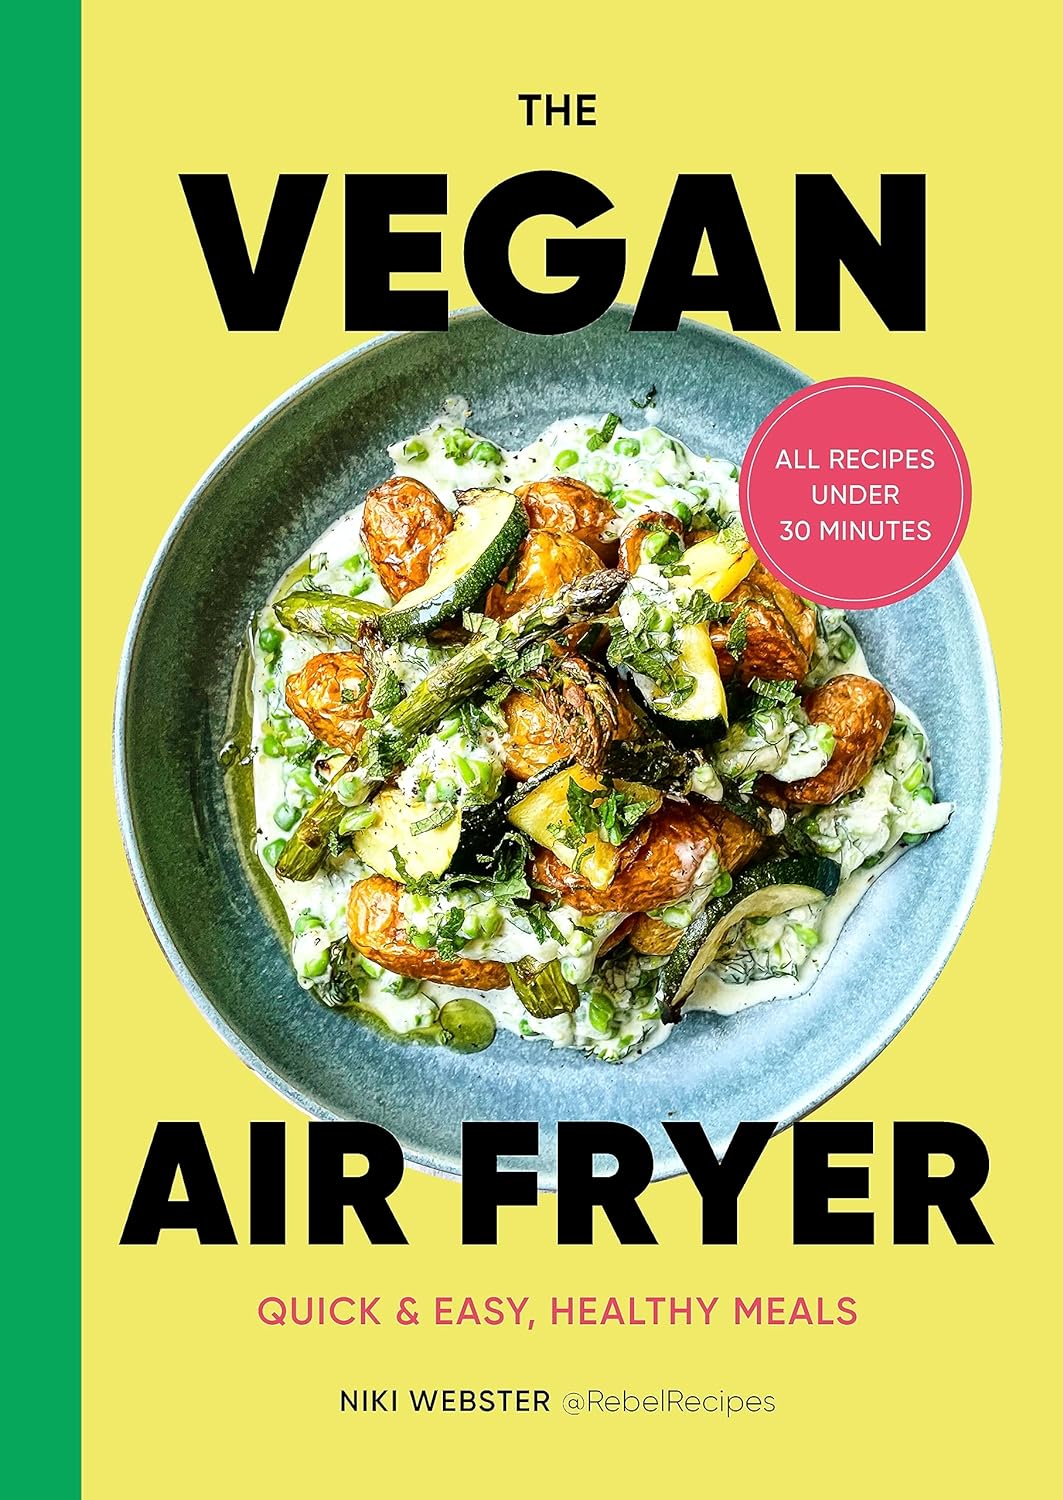 The Vegan Air Fryer by Niki Webster